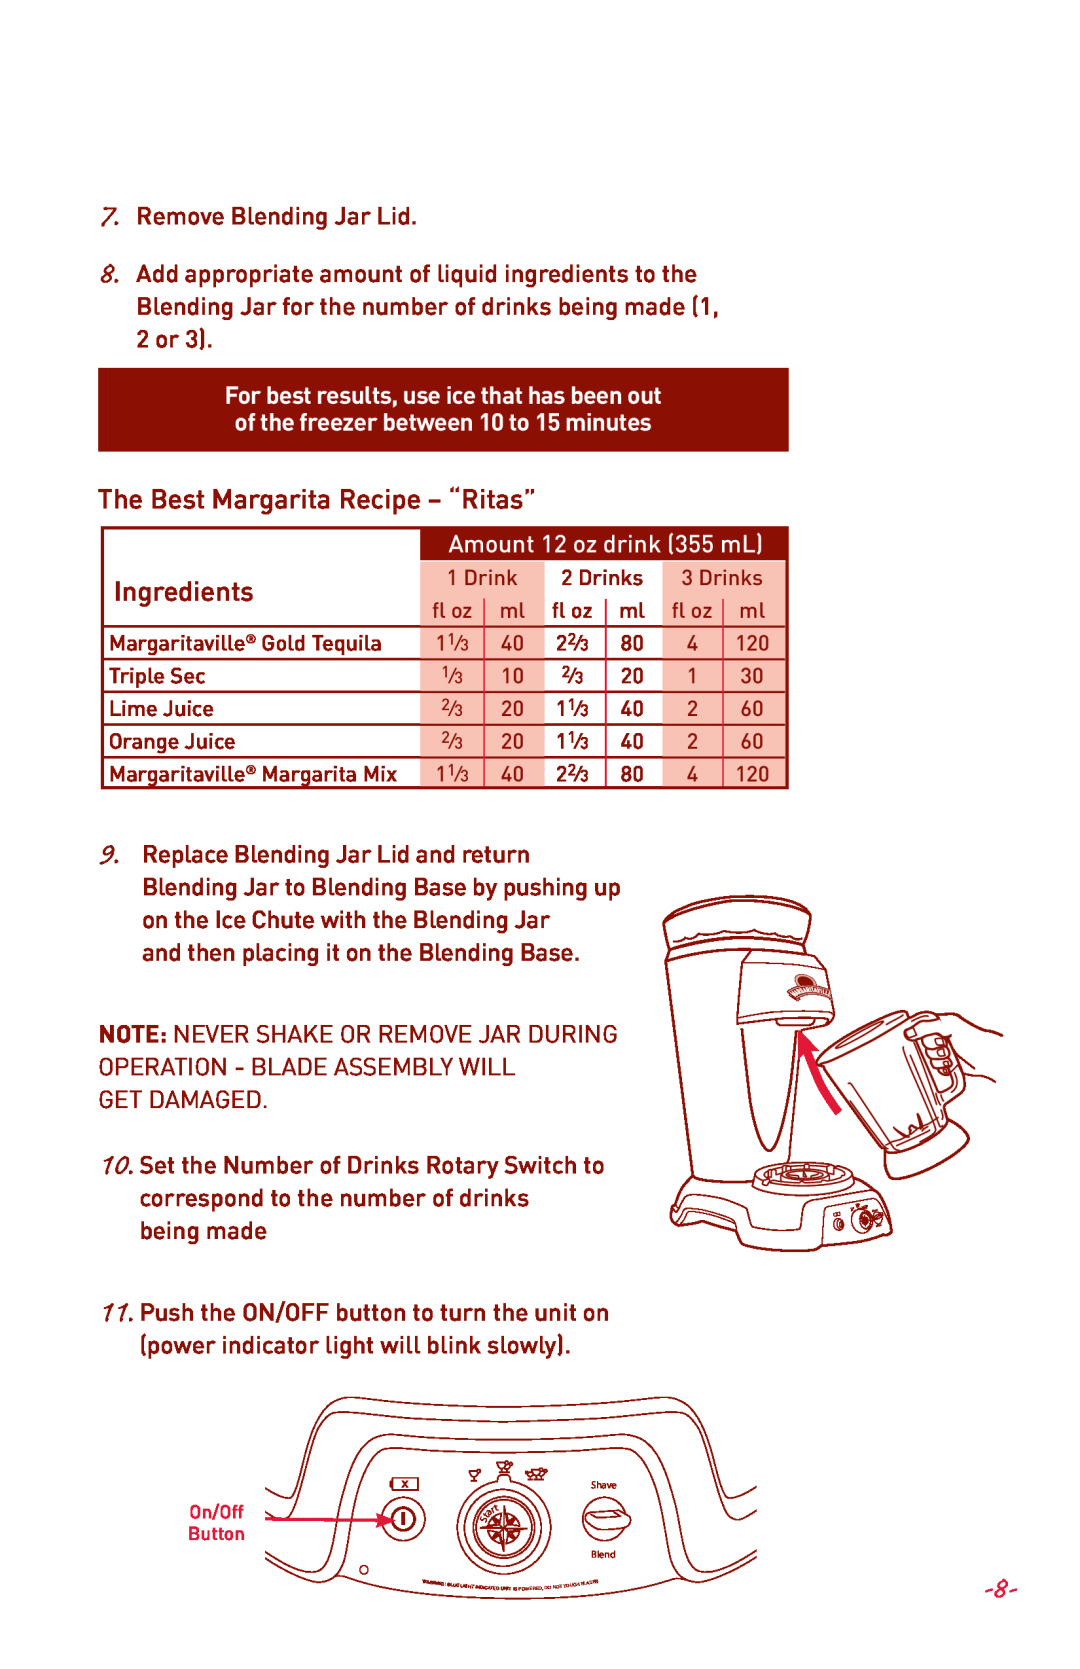 Margaritaville NBMGDM0900 user manual The Best Margarita Recipe - “Ritas”, Ingredients, Amount 12 oz drink 355 mL 